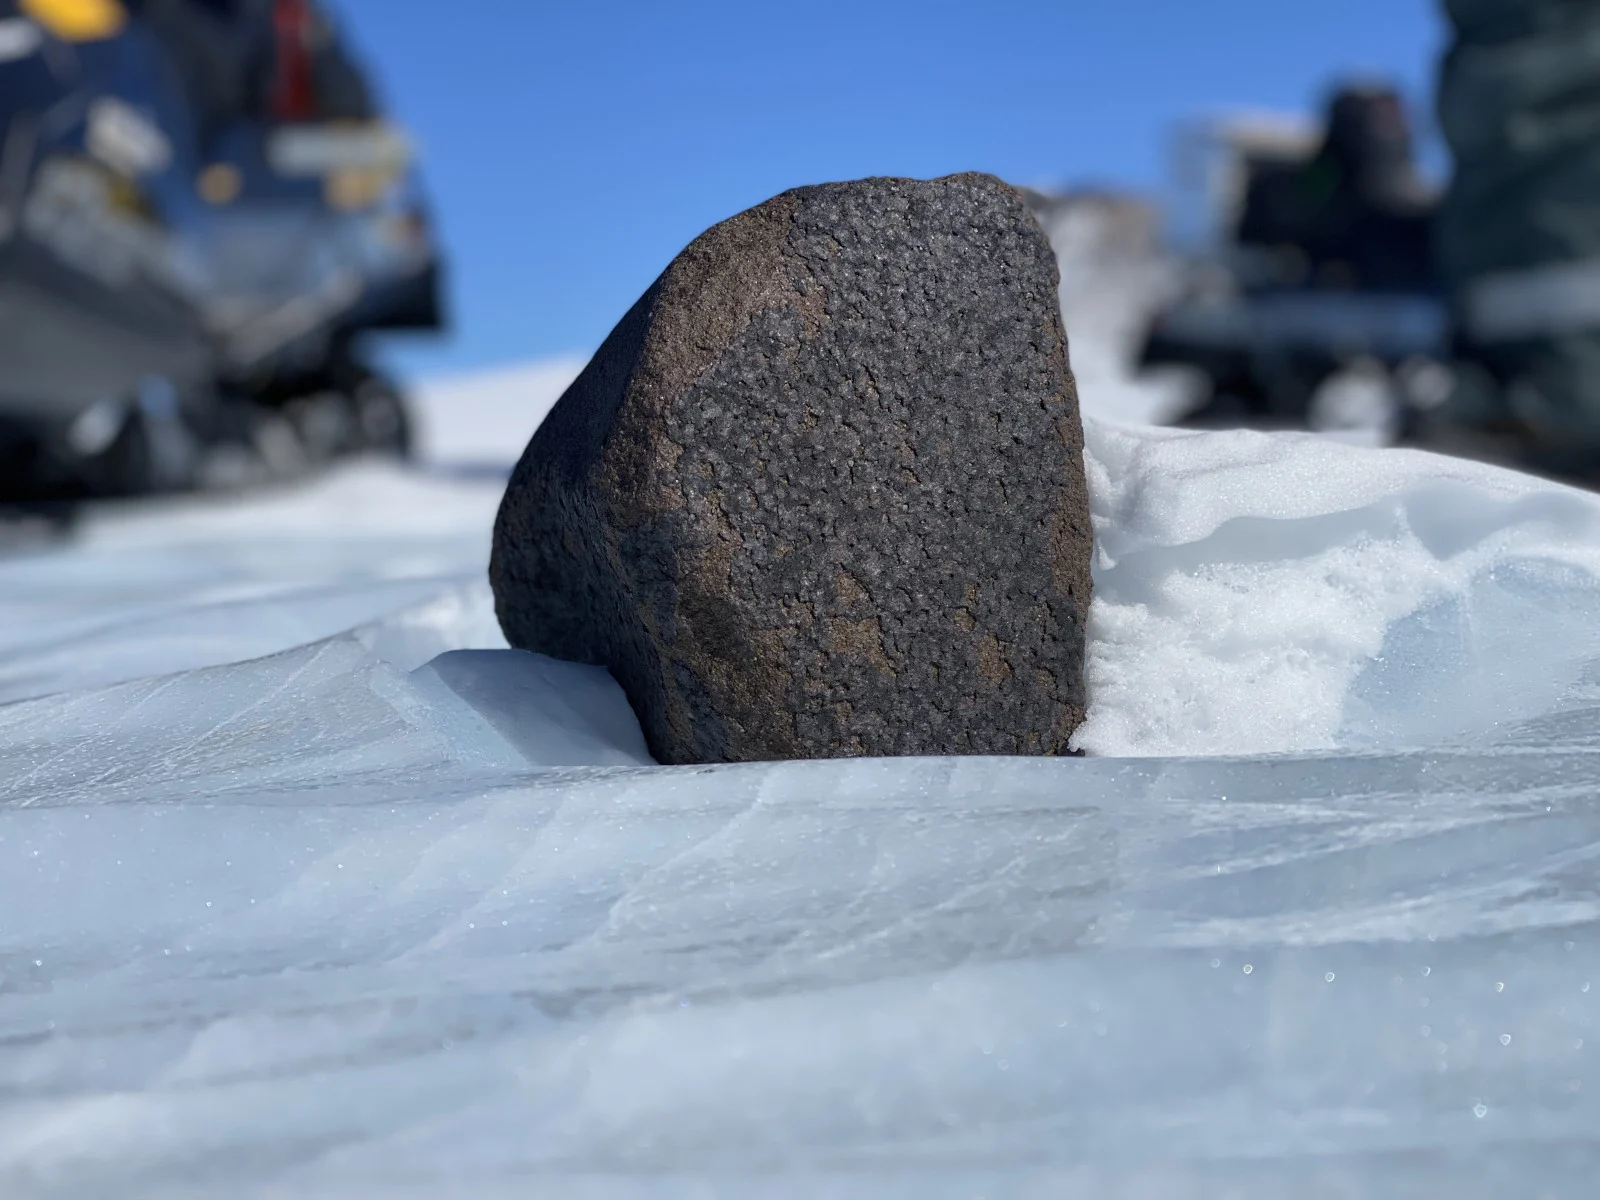 One of the largest Antarctic meteorites - Maria Valdes